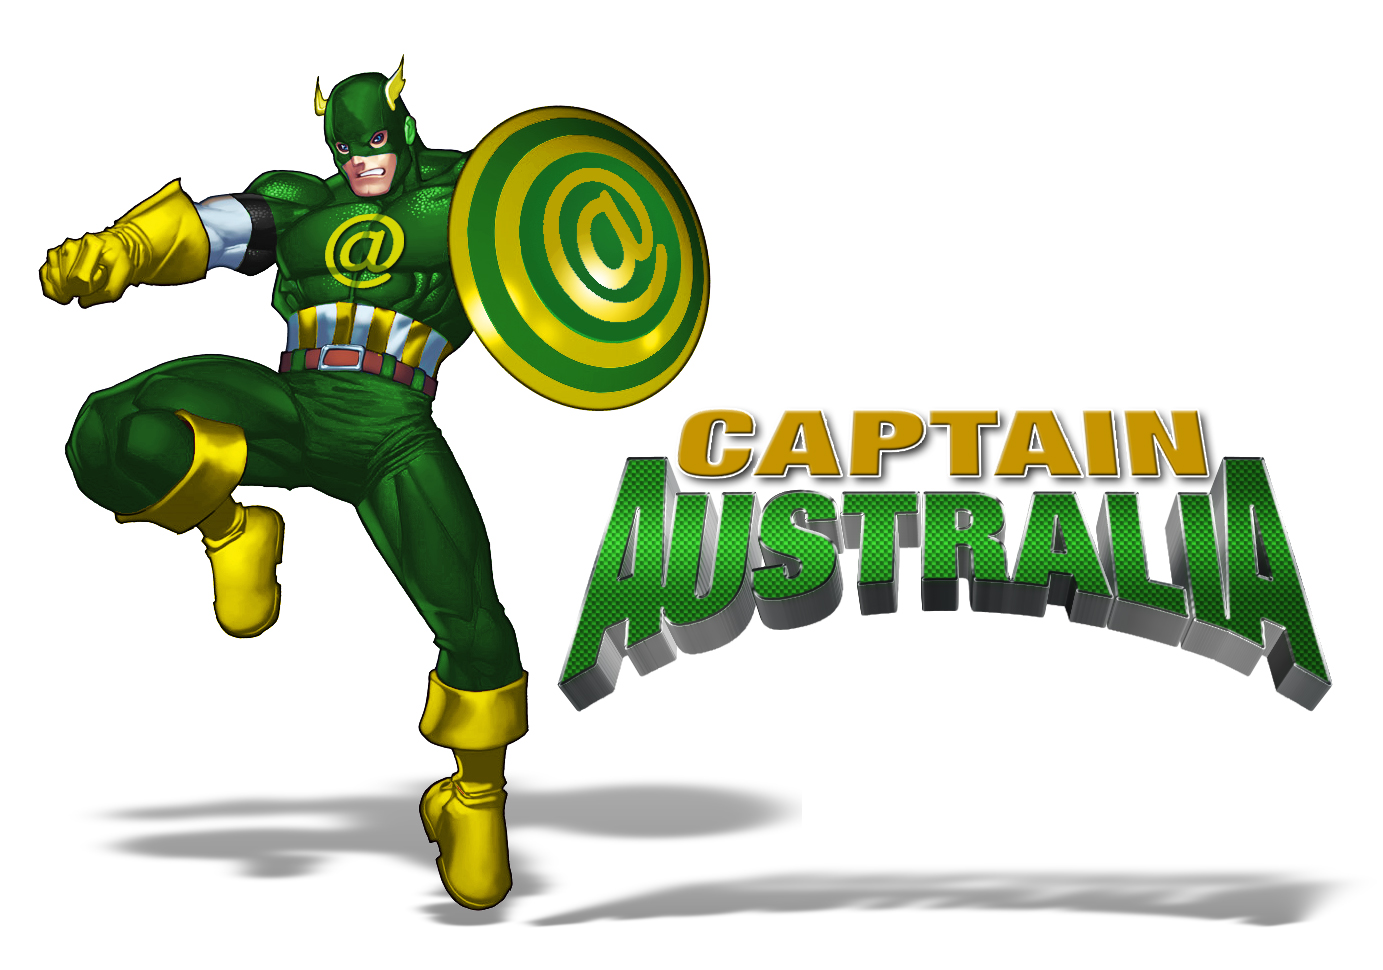 Captain-Australia-Combined.jpg